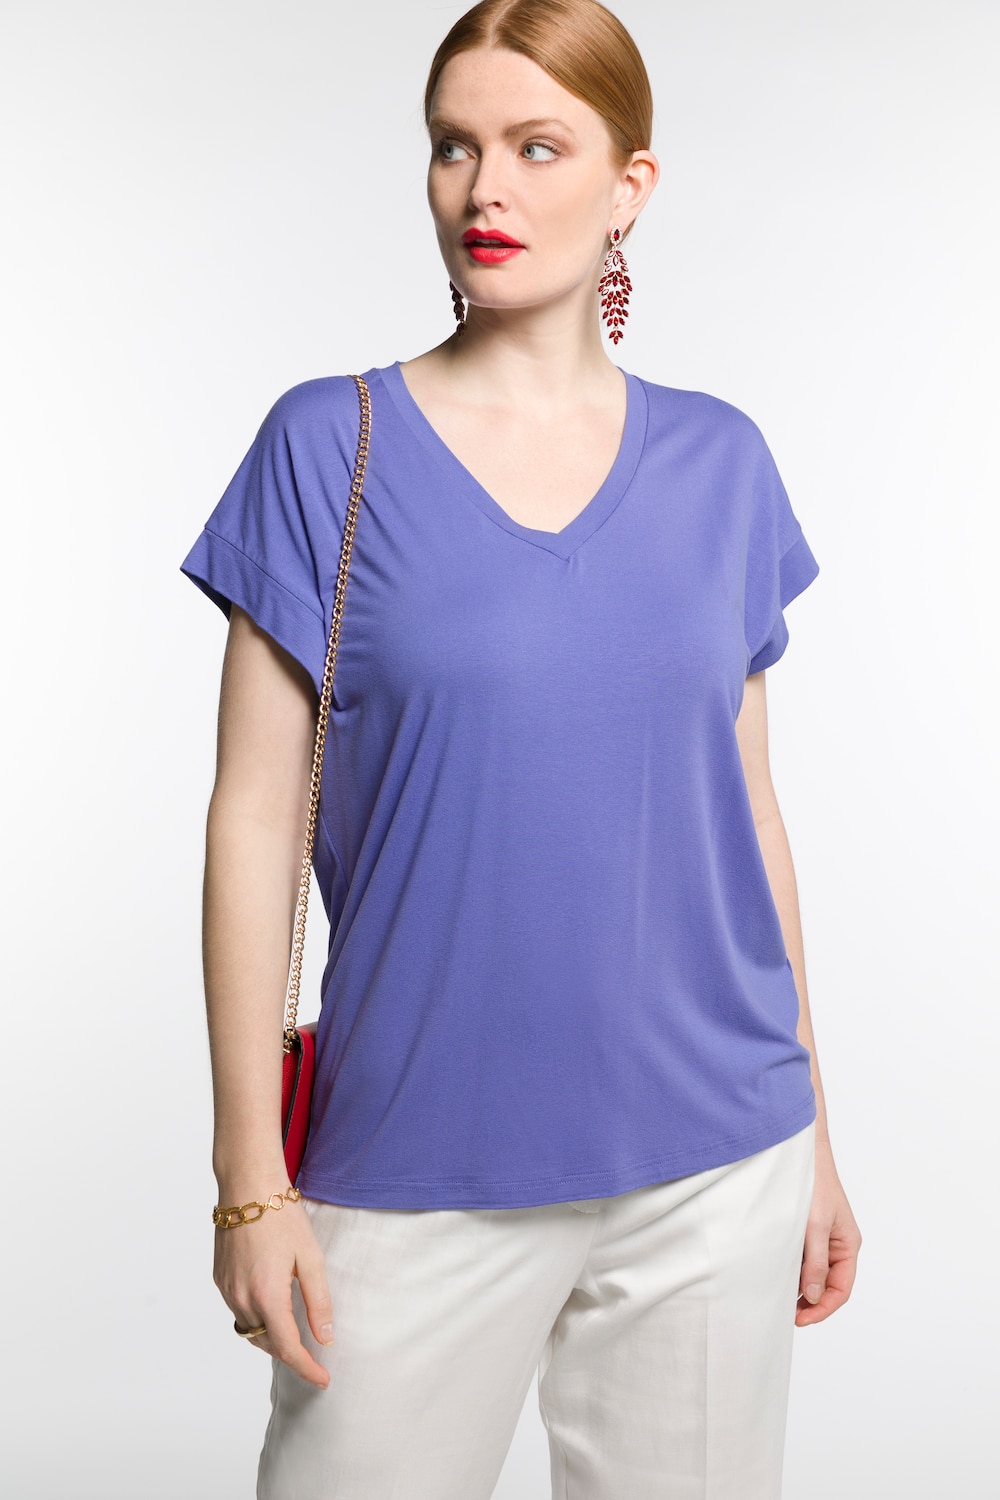 Plus Size V-Neck Crepe Stretch Knit Top, Woman, purple, size: 20/22, viscose, Ulla Popken